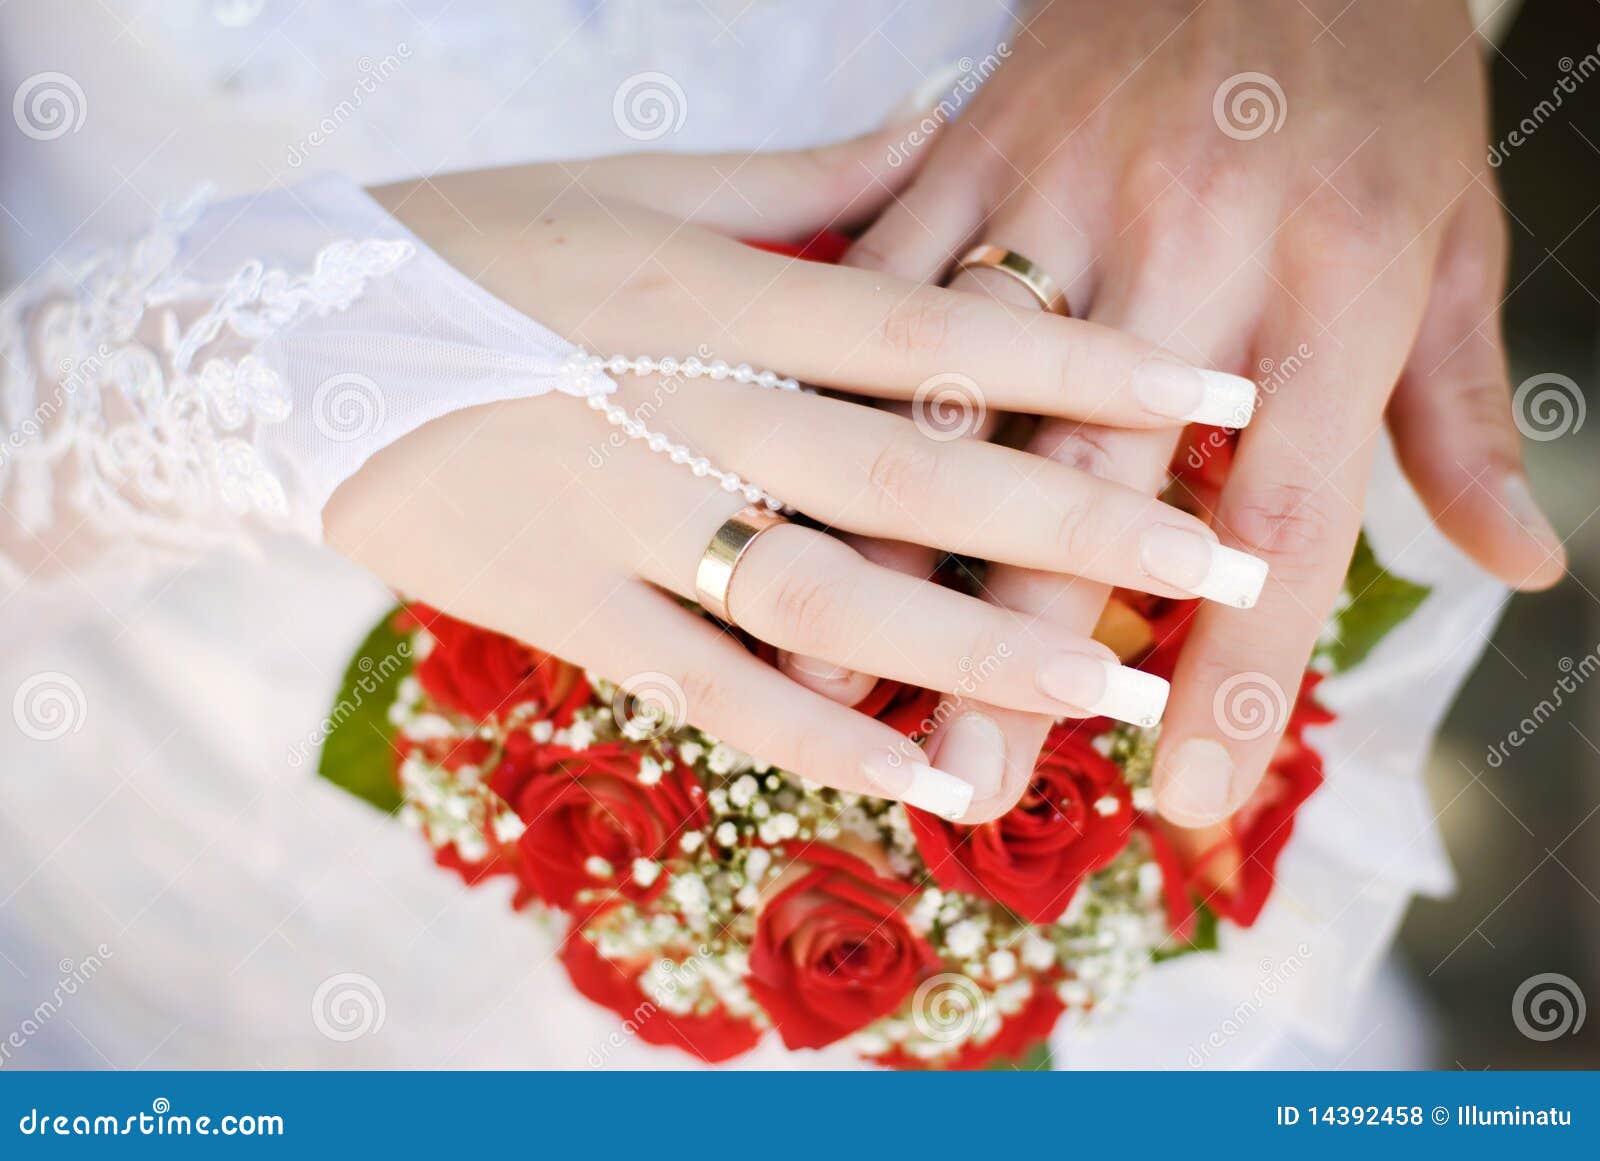 weddings rings with hands